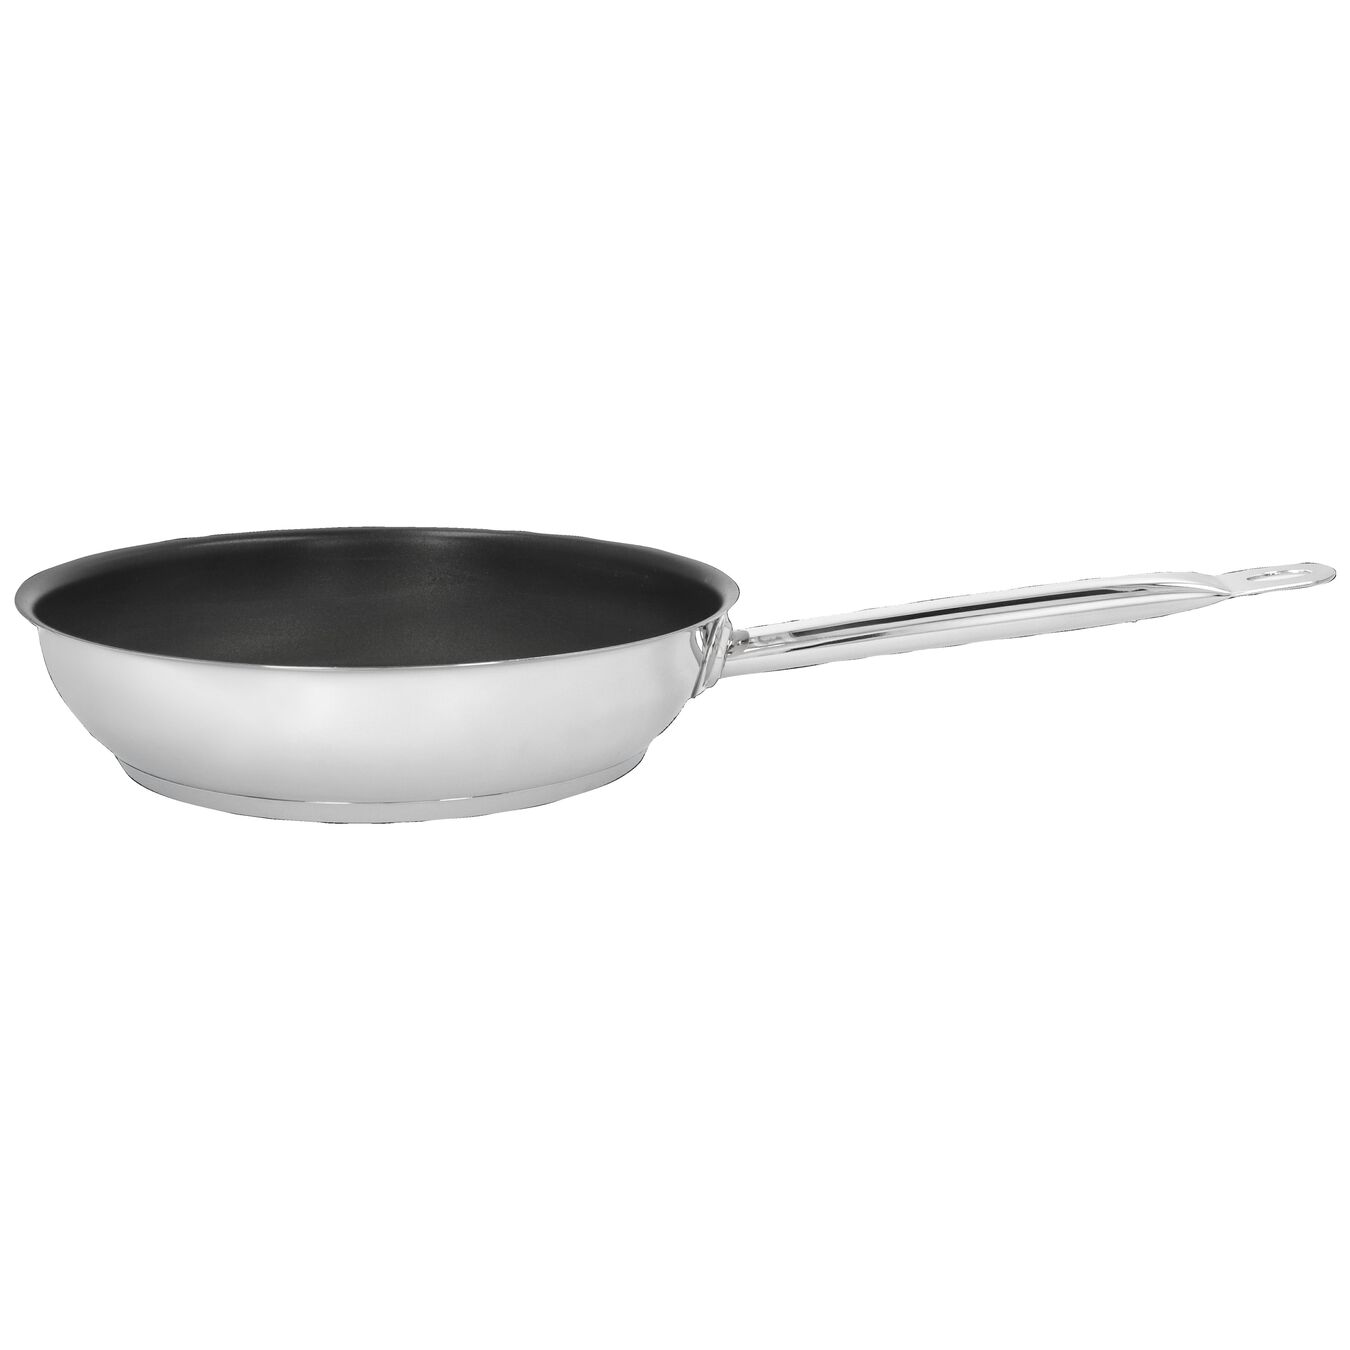 28 cm 18/10 Stainless Steel Frying pan silver-black,,large 1